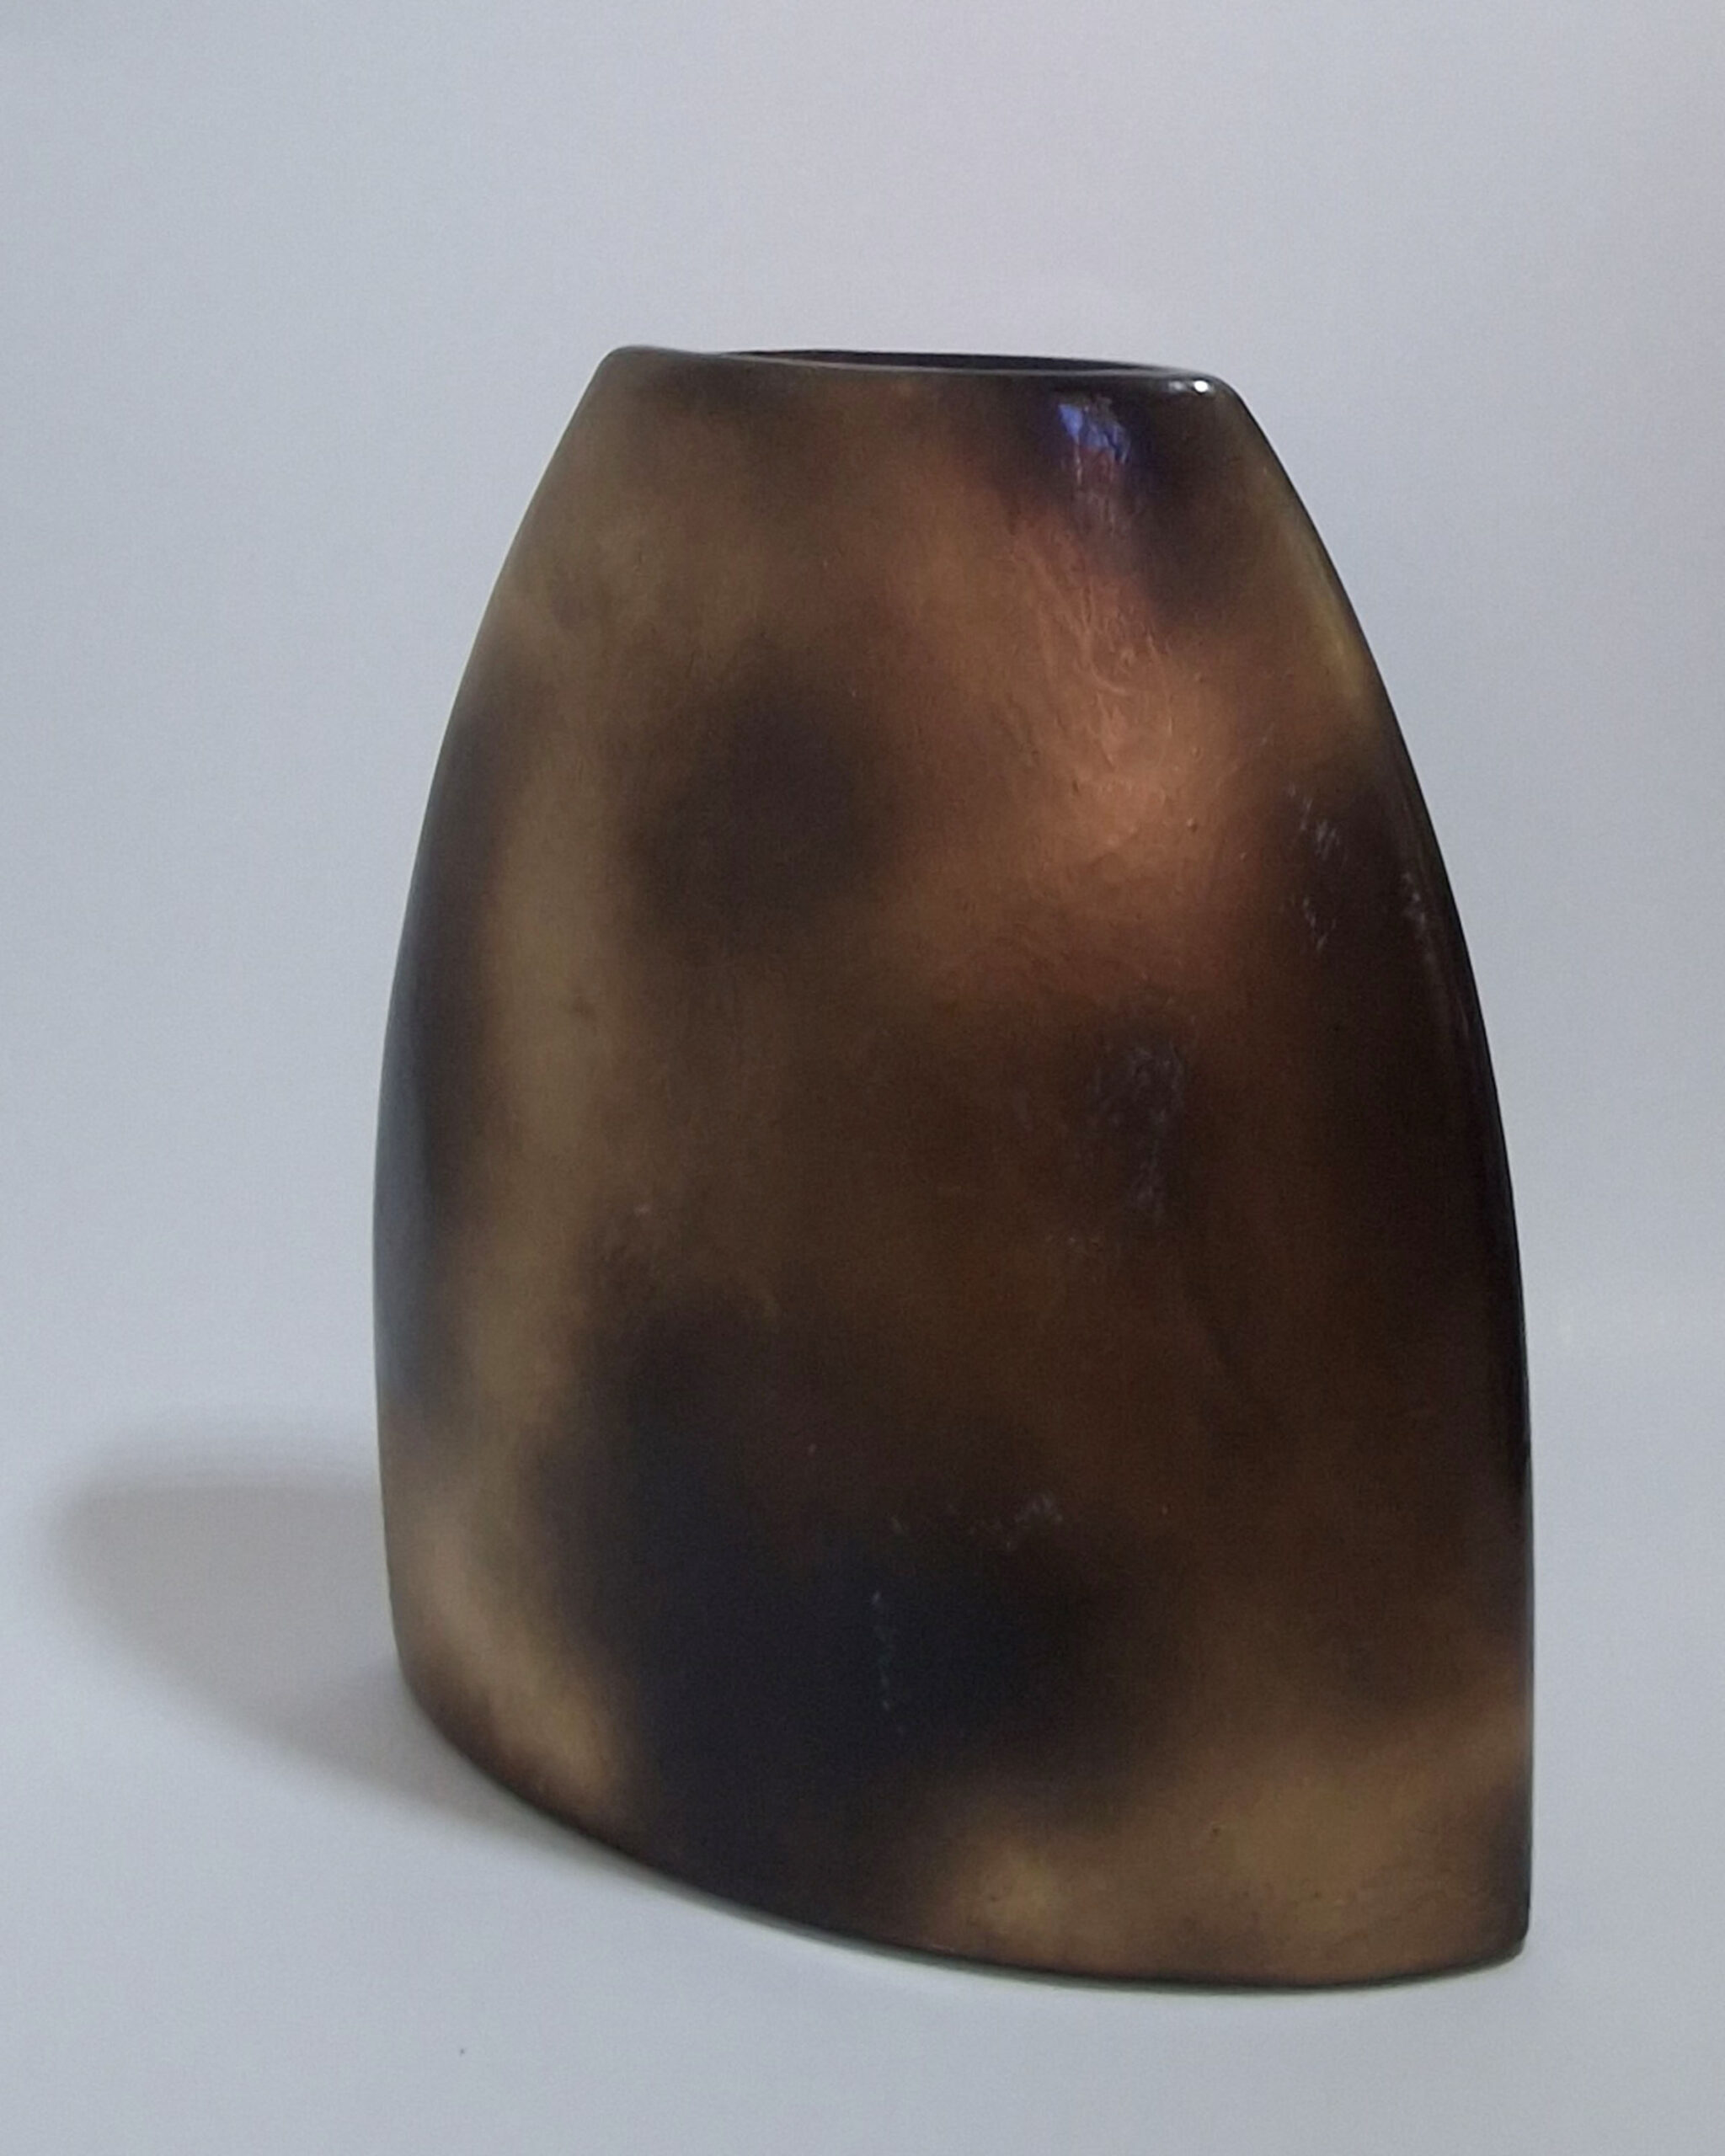 Gold metallic vase with black details